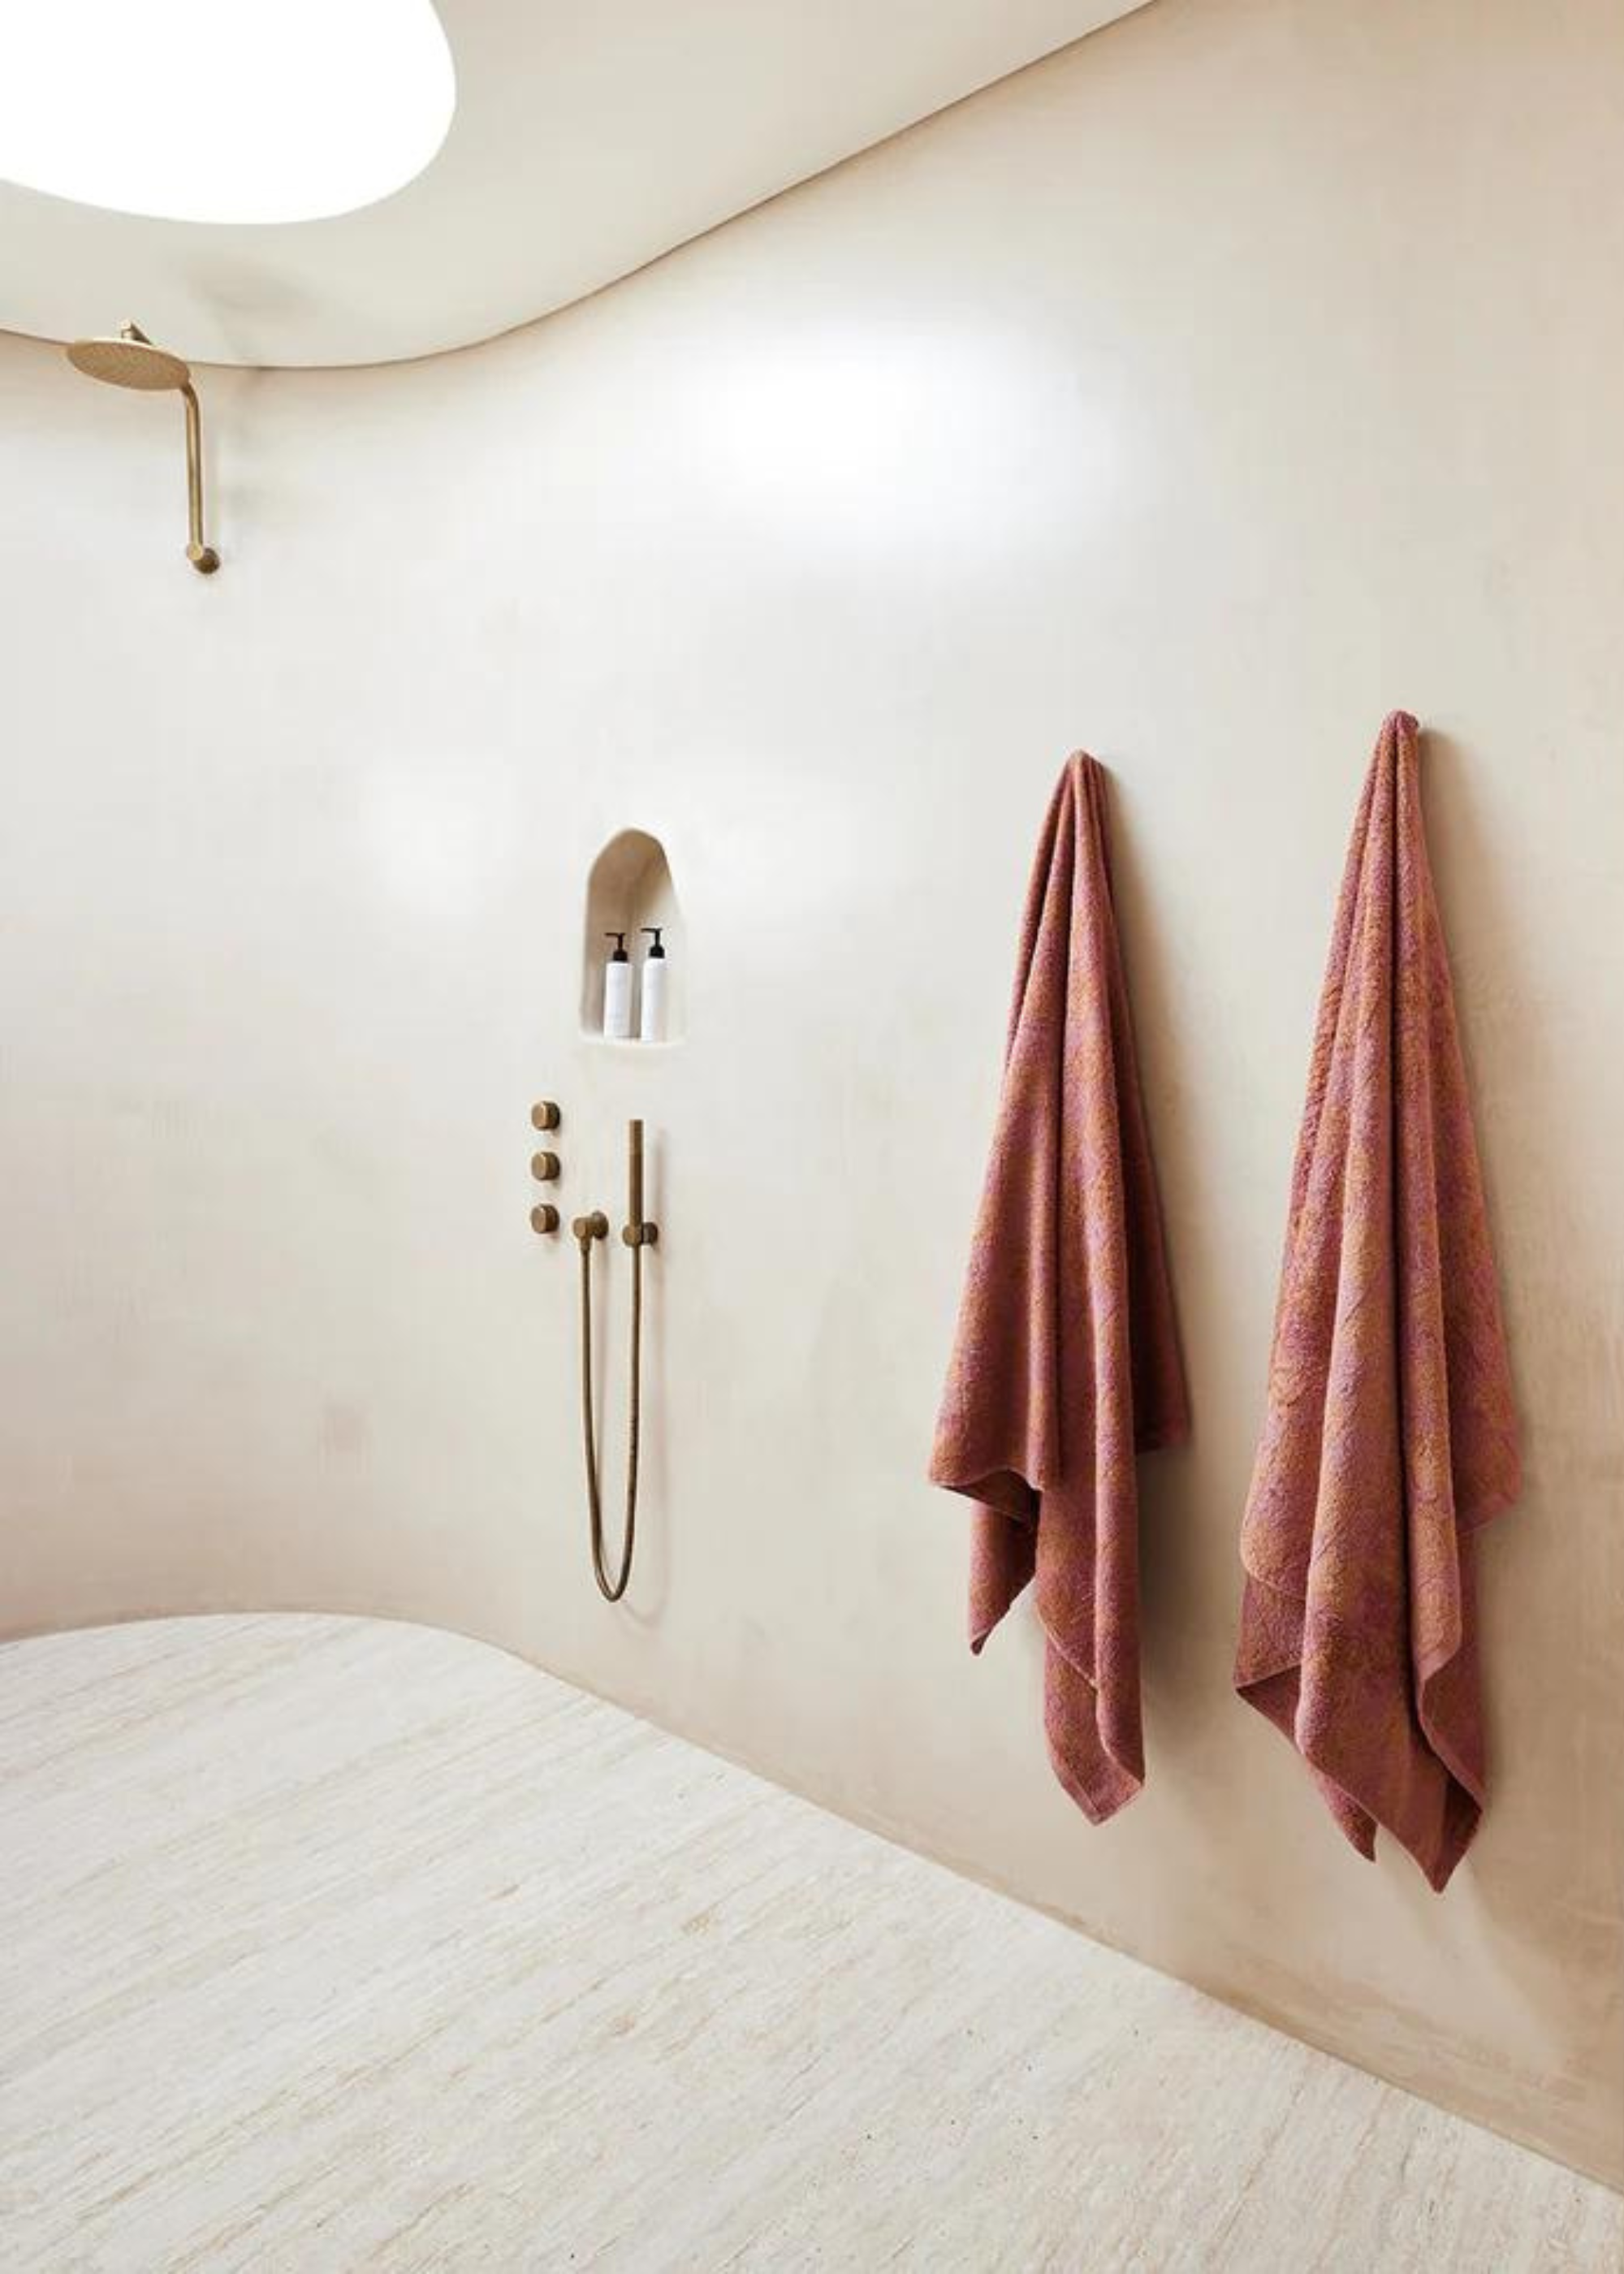 Weft End Oversized Bath Towel - Pastel Pink